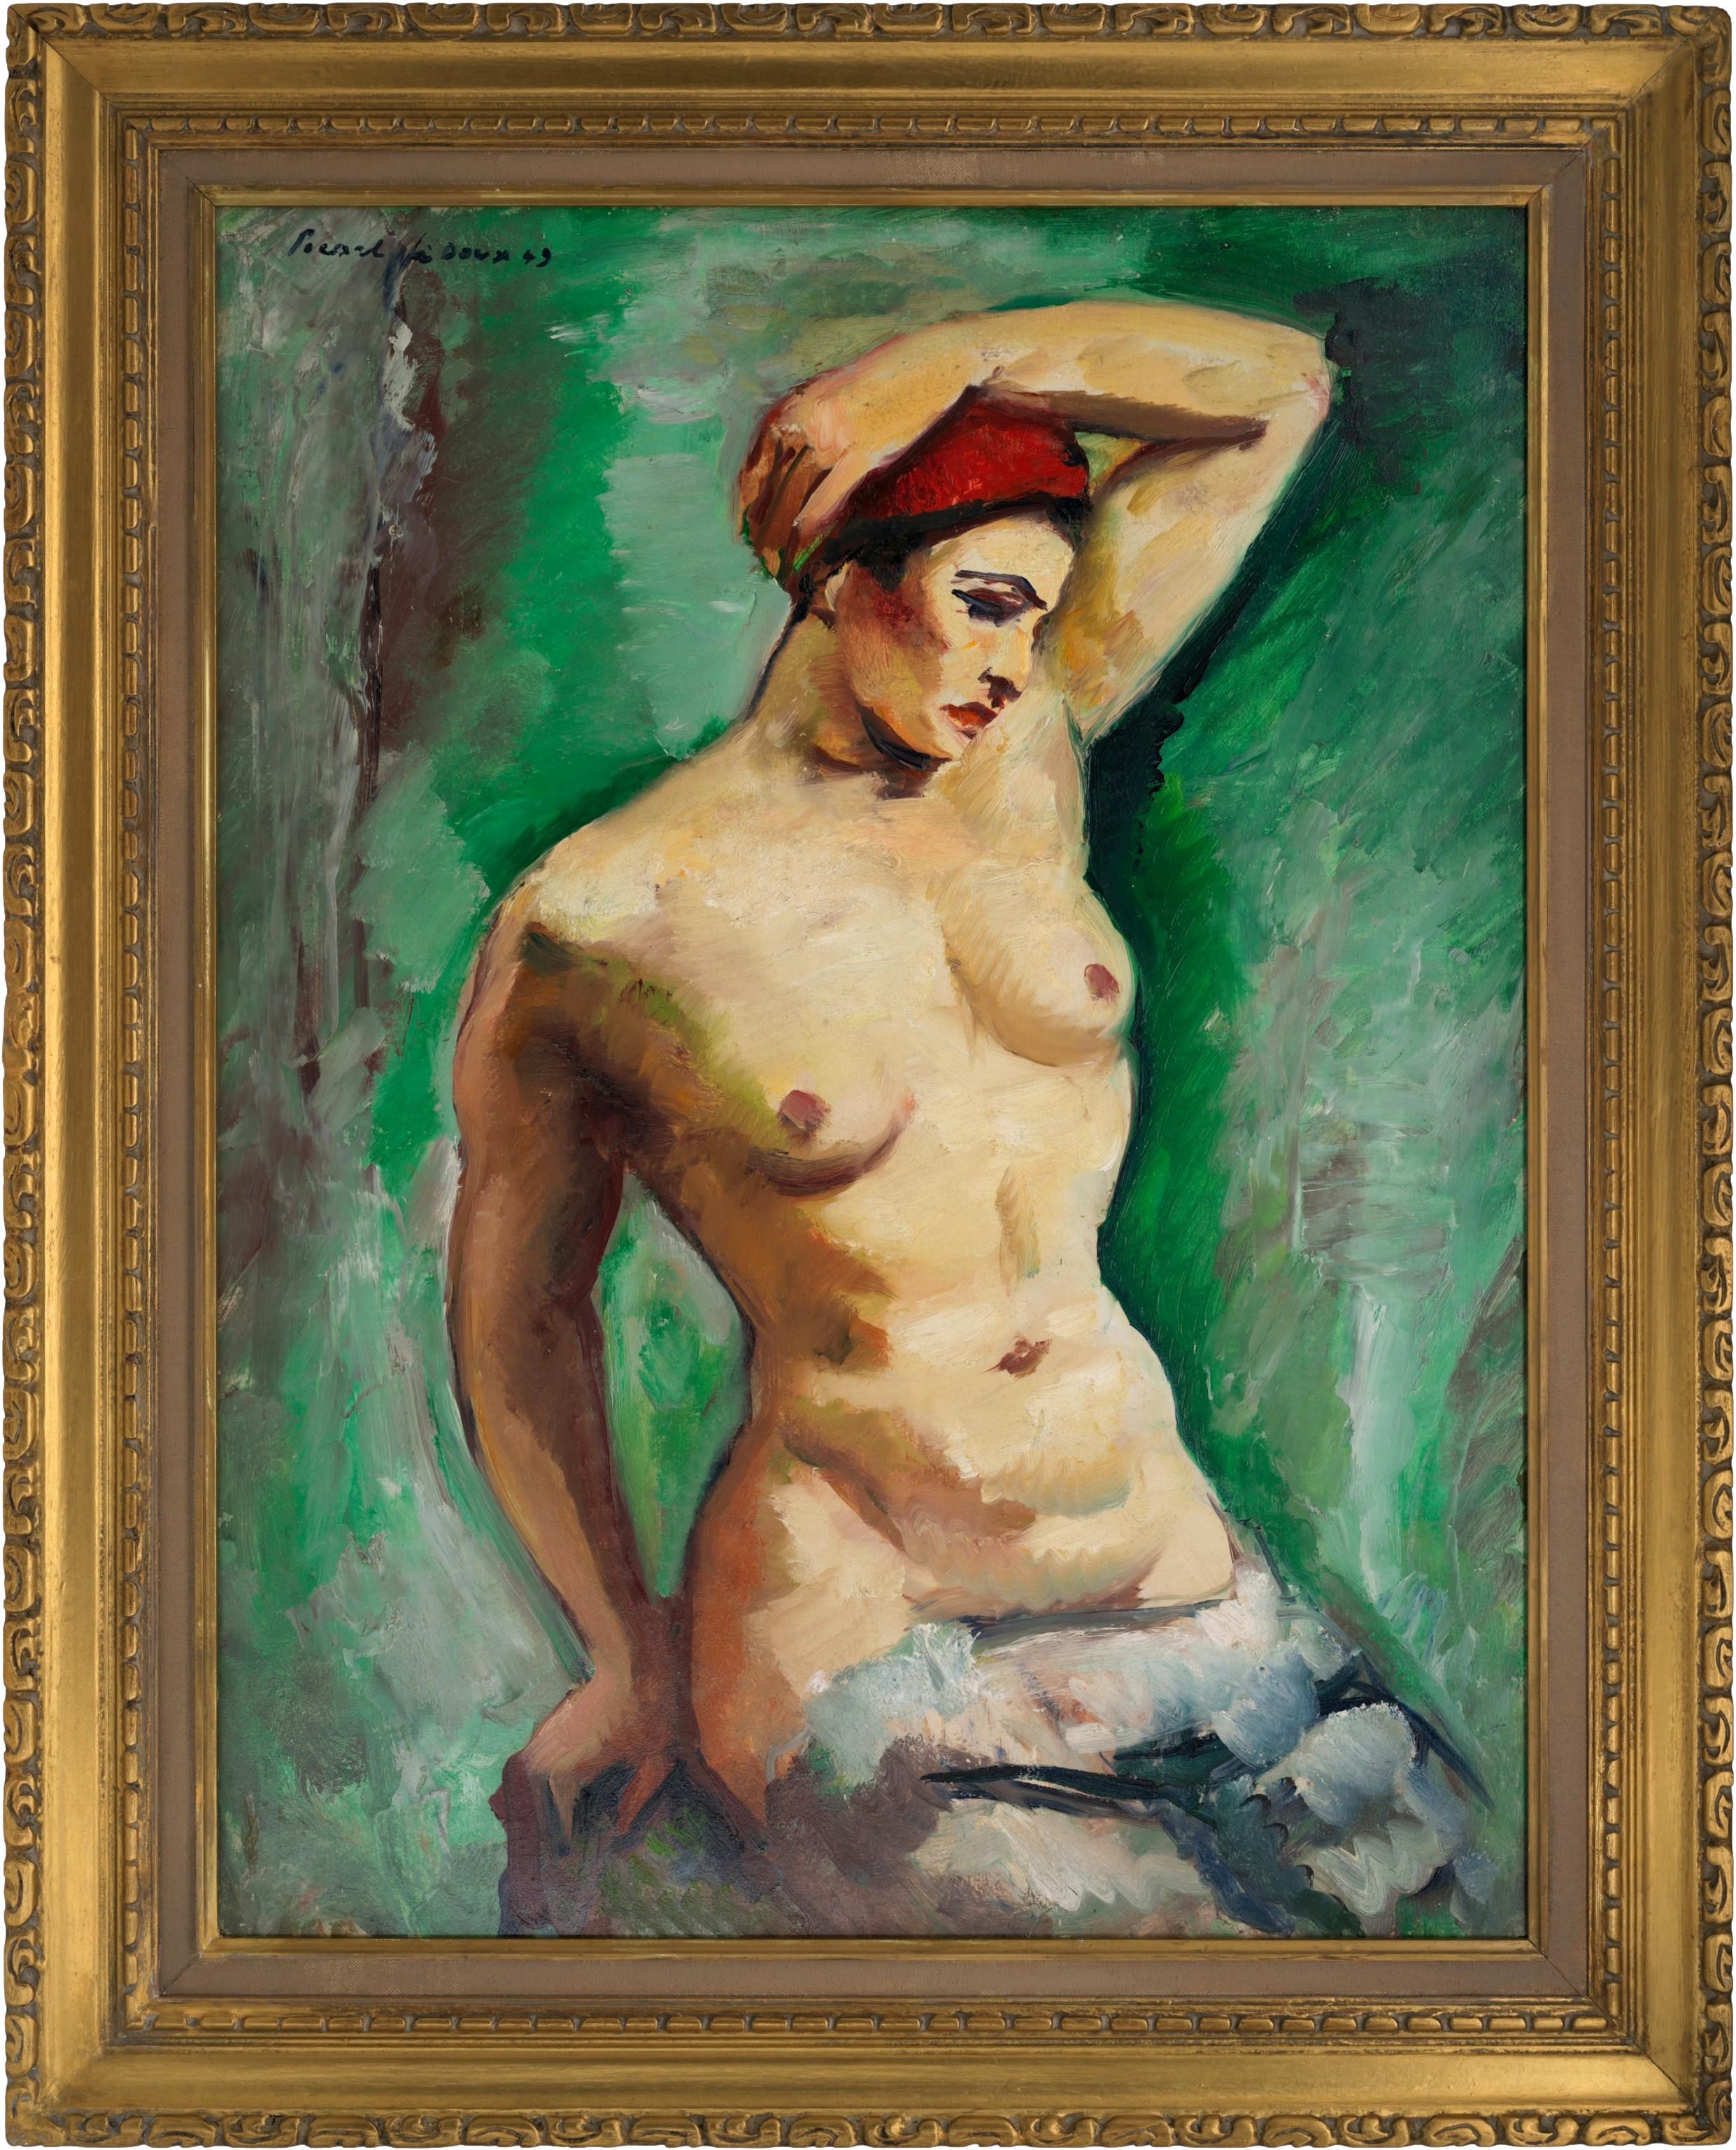 Charles PICART LE DOUX, Model on Green Background, Oil on Isorel, 1949